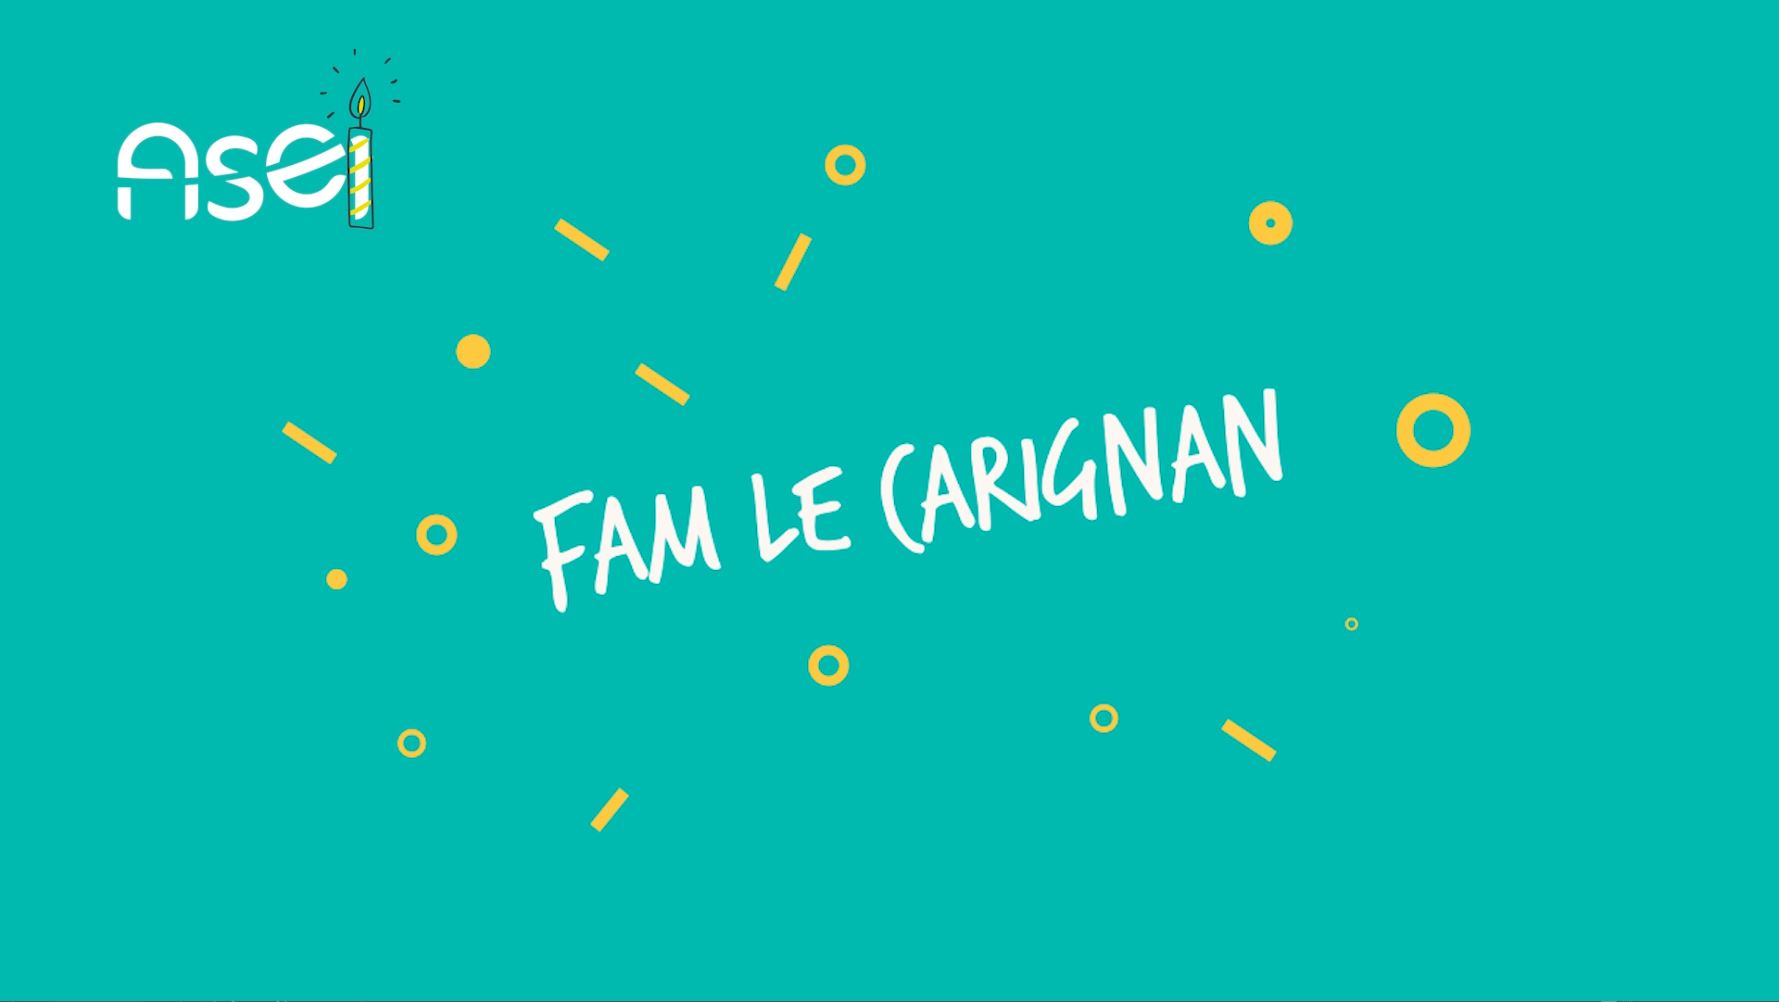 carignan